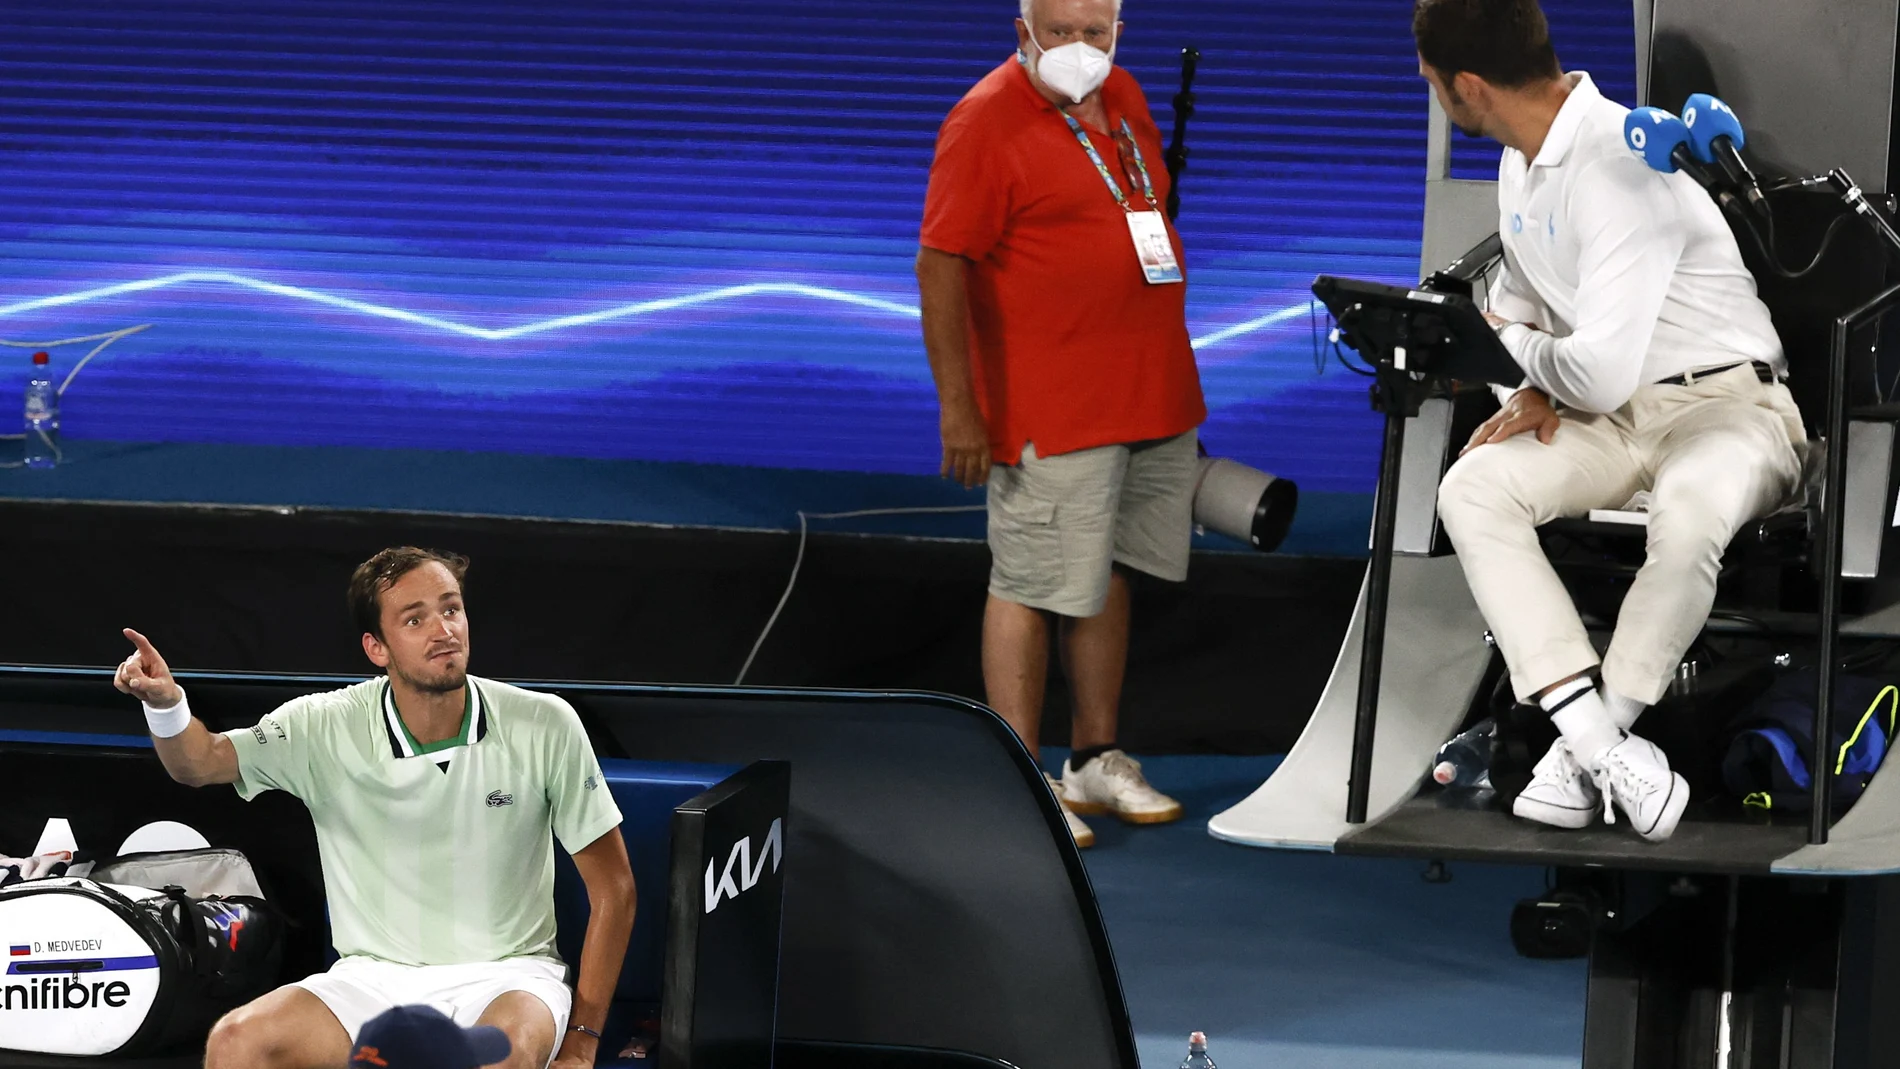 Daniil Medvedev discute gritando con el juez de silla, Jaume Campistol, durante la semifinal del Open de Australia contra Tsitsipas